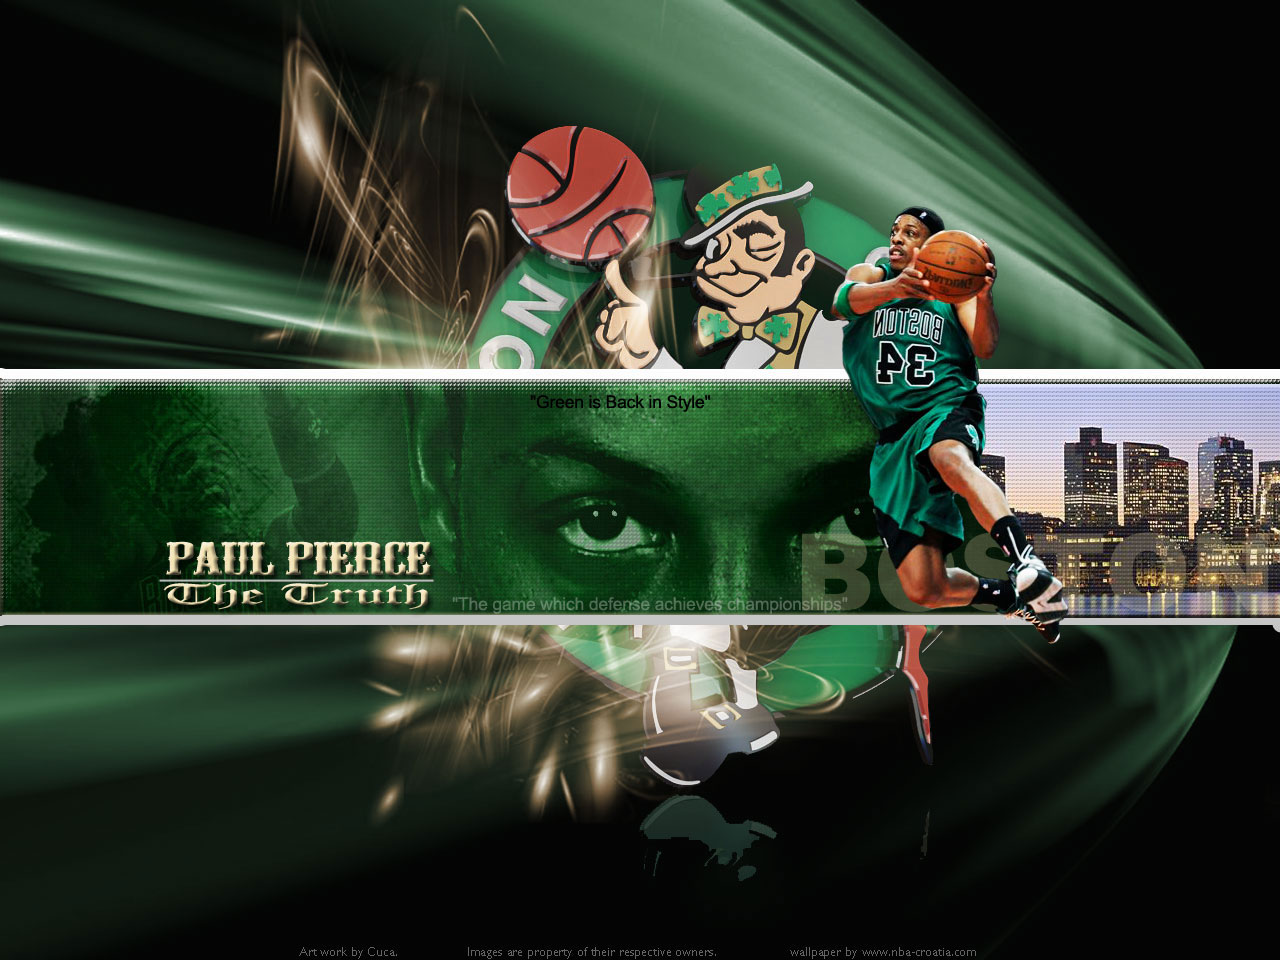 Paul Pierce Wallpaper | Basketball Wallpapers at BasketWallpapers.com